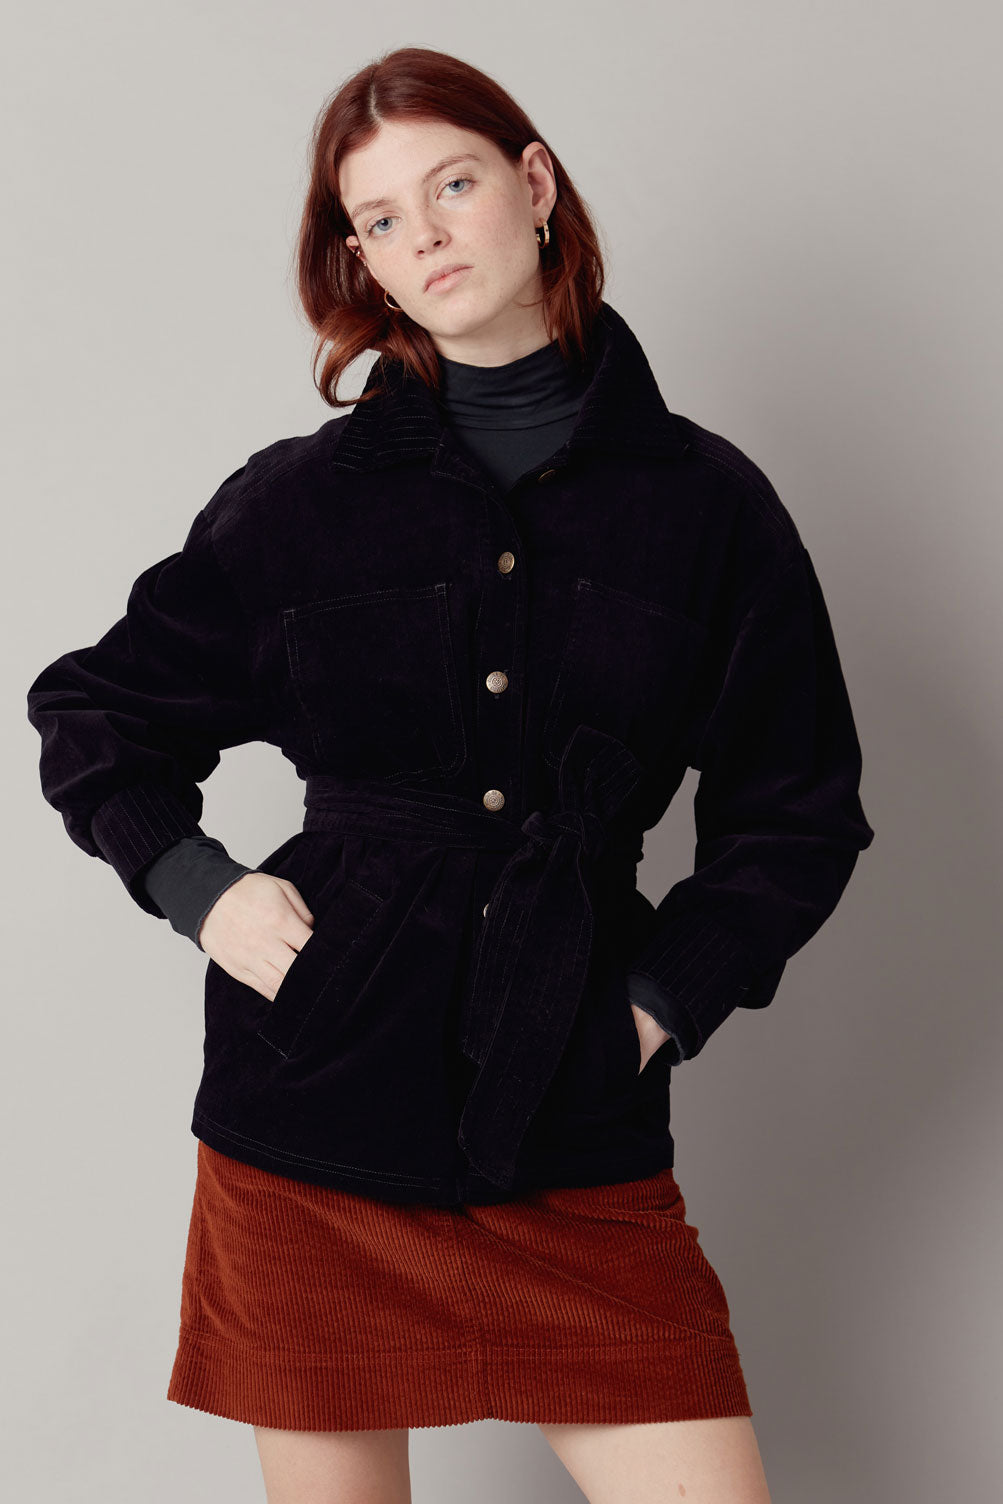 Black corduroy jacket APPOLINO made from 100% organic cotton from Komodo